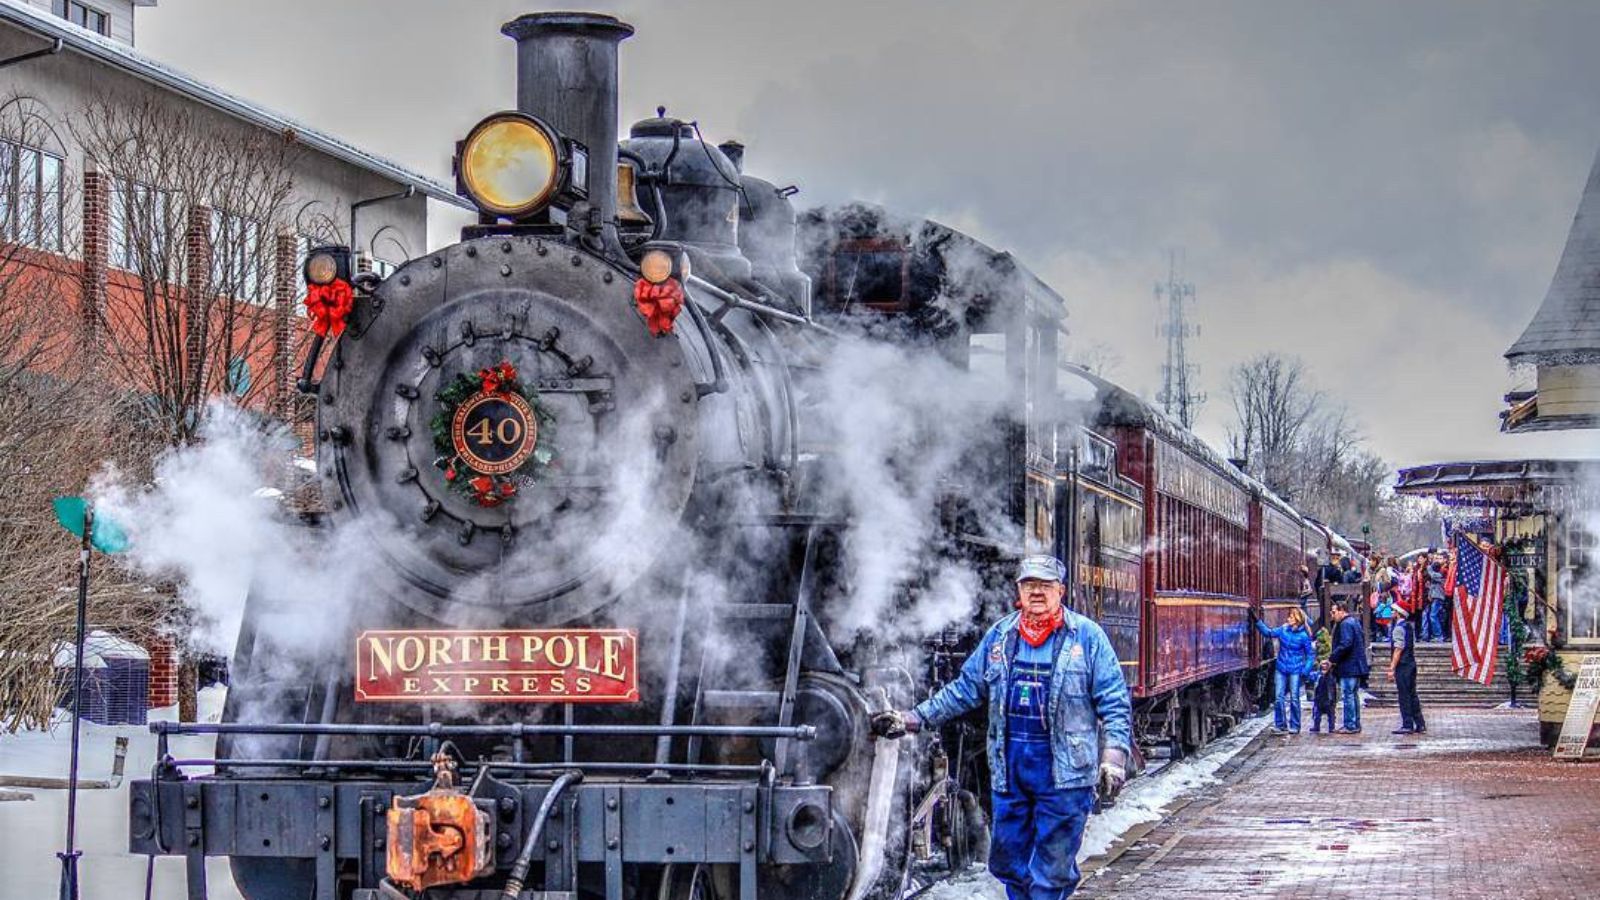 Santa's North Pole train on the New Hope Railroad (Photo: @SayHellotoAmerica)